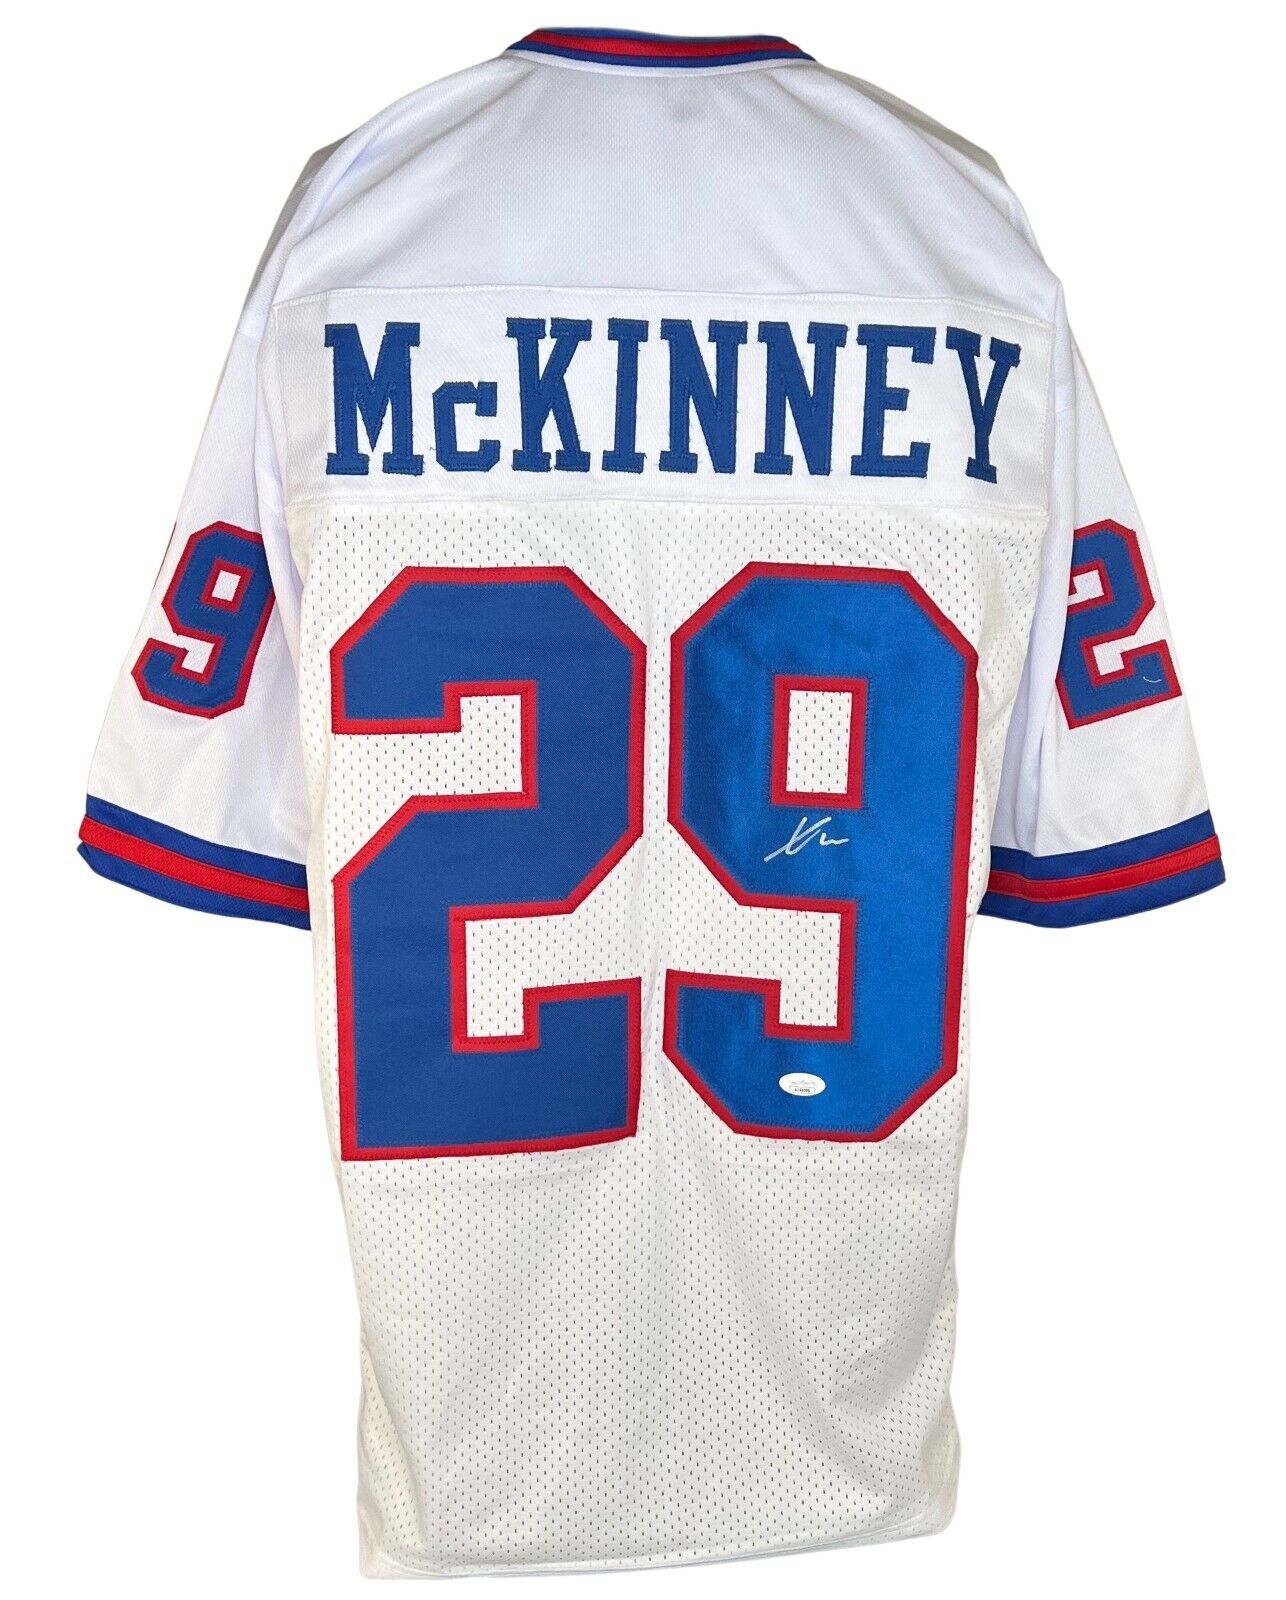 mckinney giants jersey